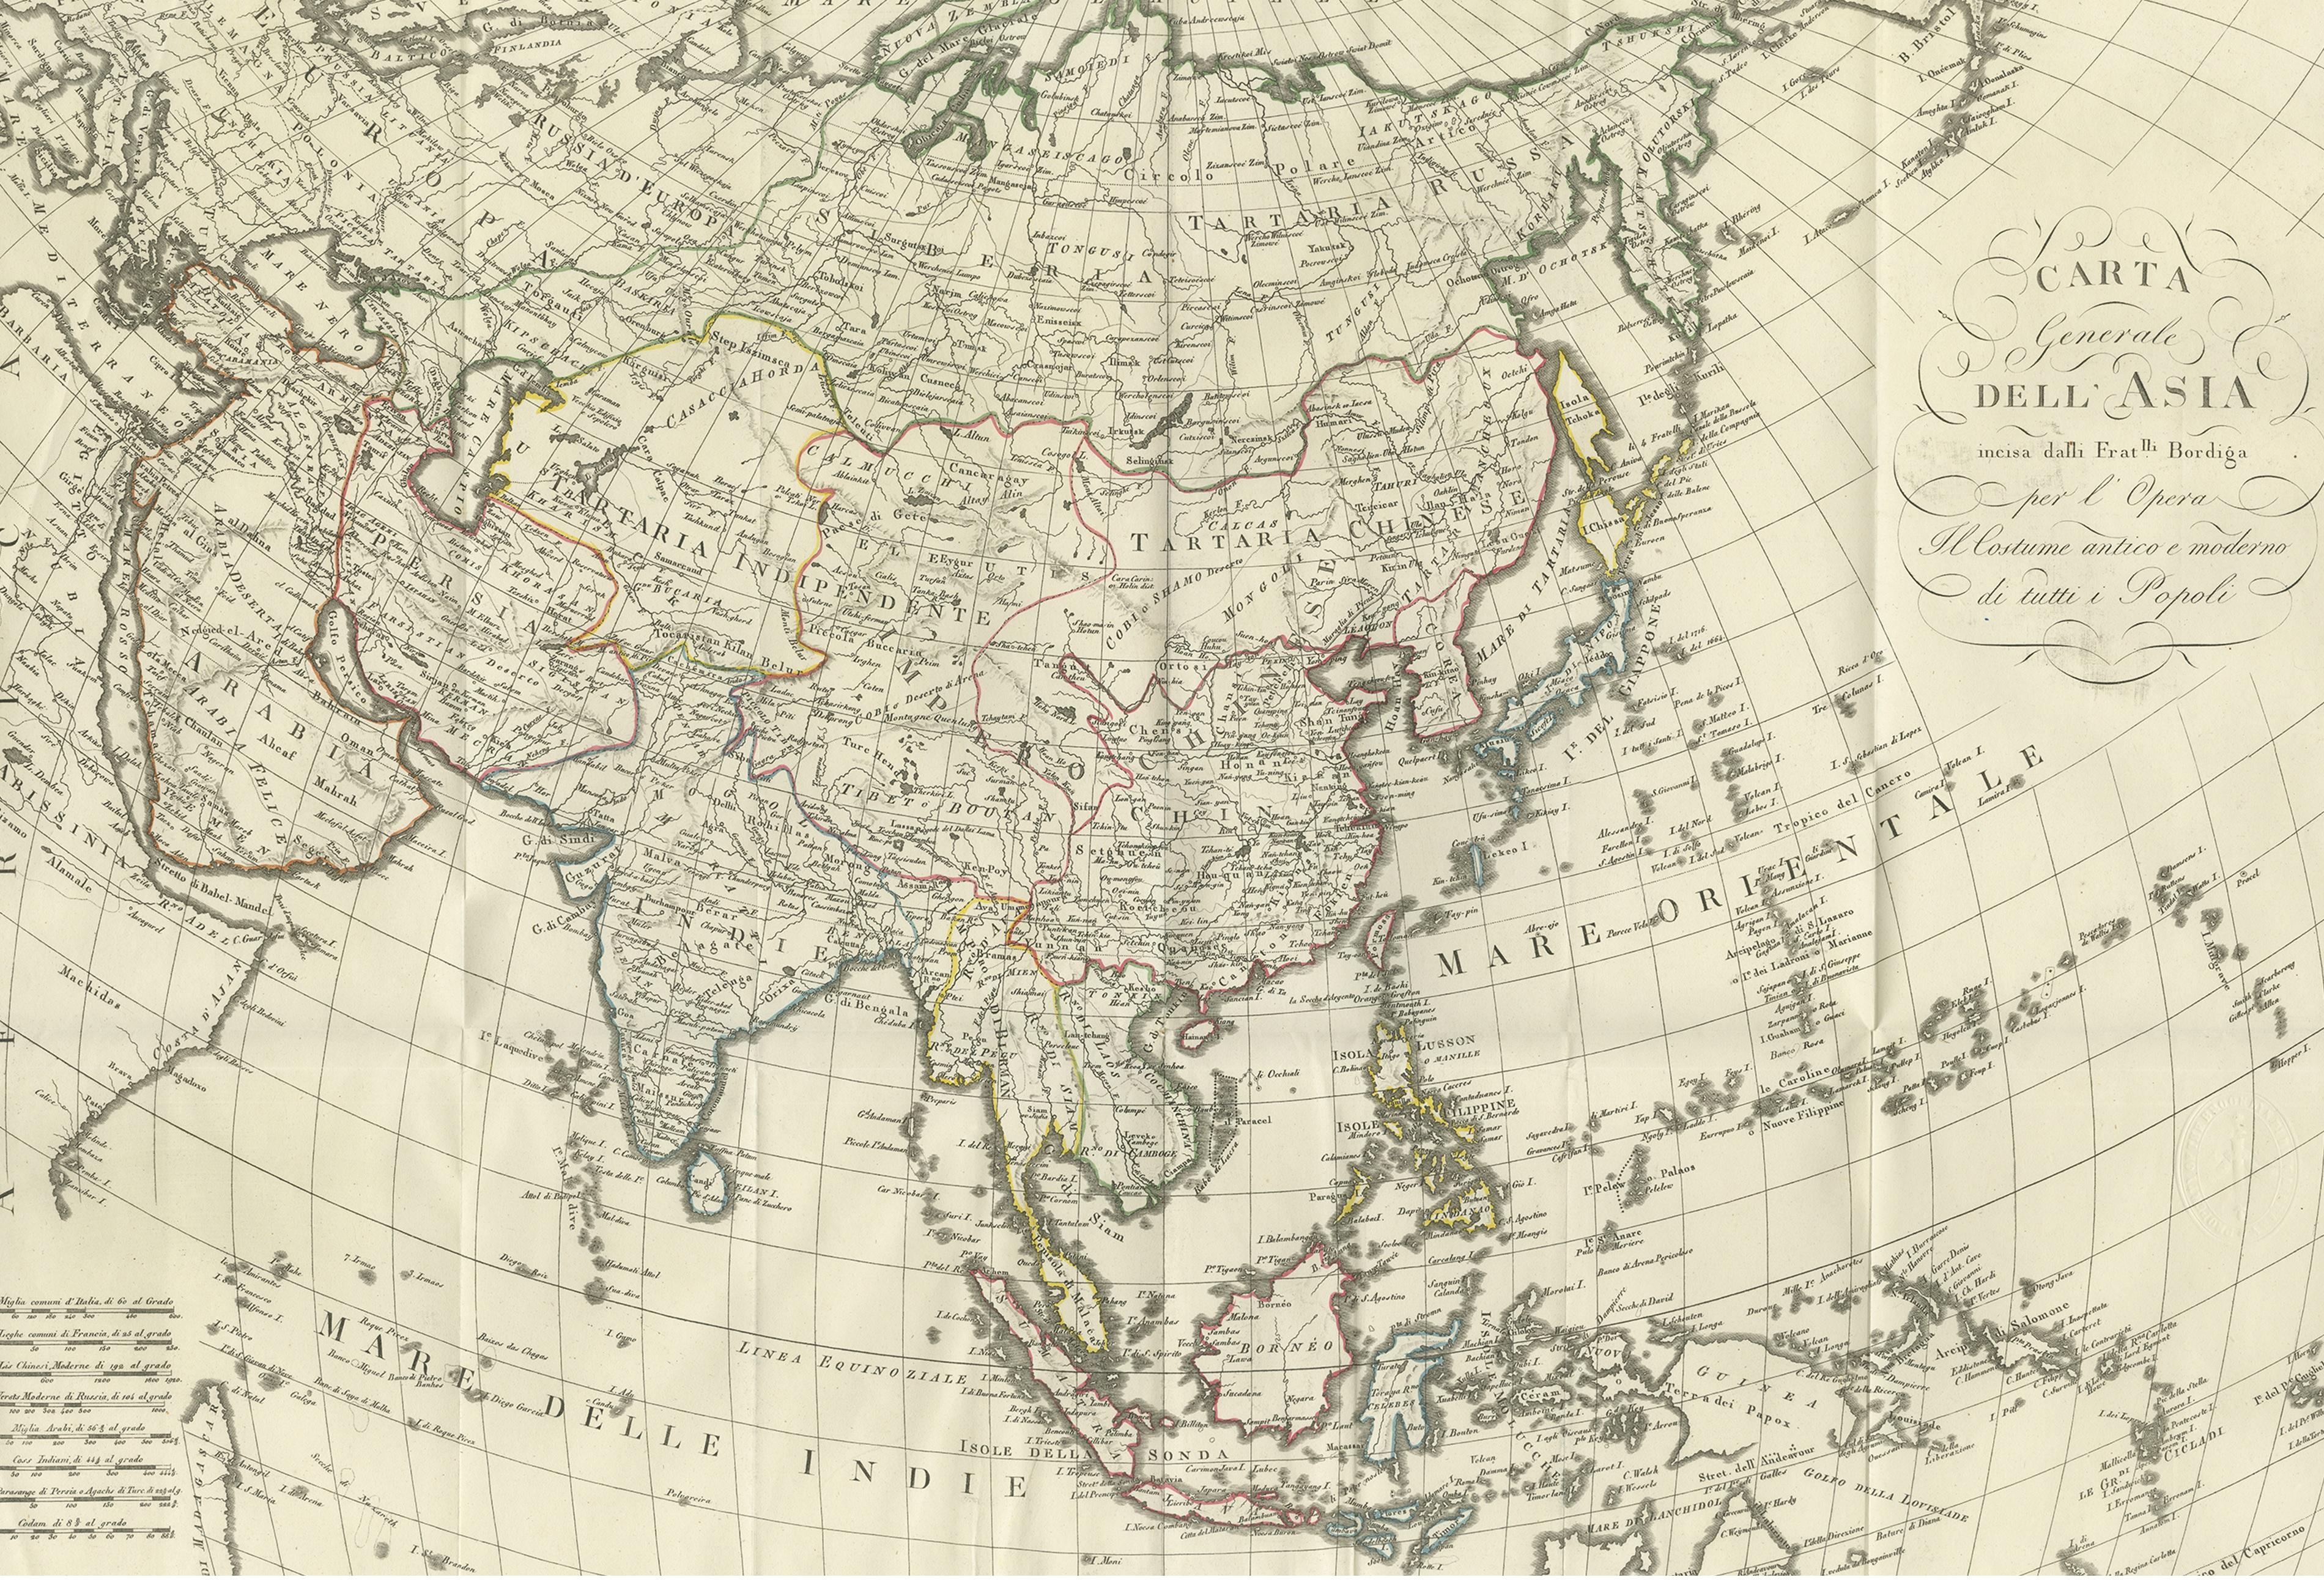 Antique map titled 'Carta generale dell' Asia (..)'. Original antique map of Asia. This map originates from ' Le Costume Ancien et Moderne' by Jules Ferrario. Published 1815.